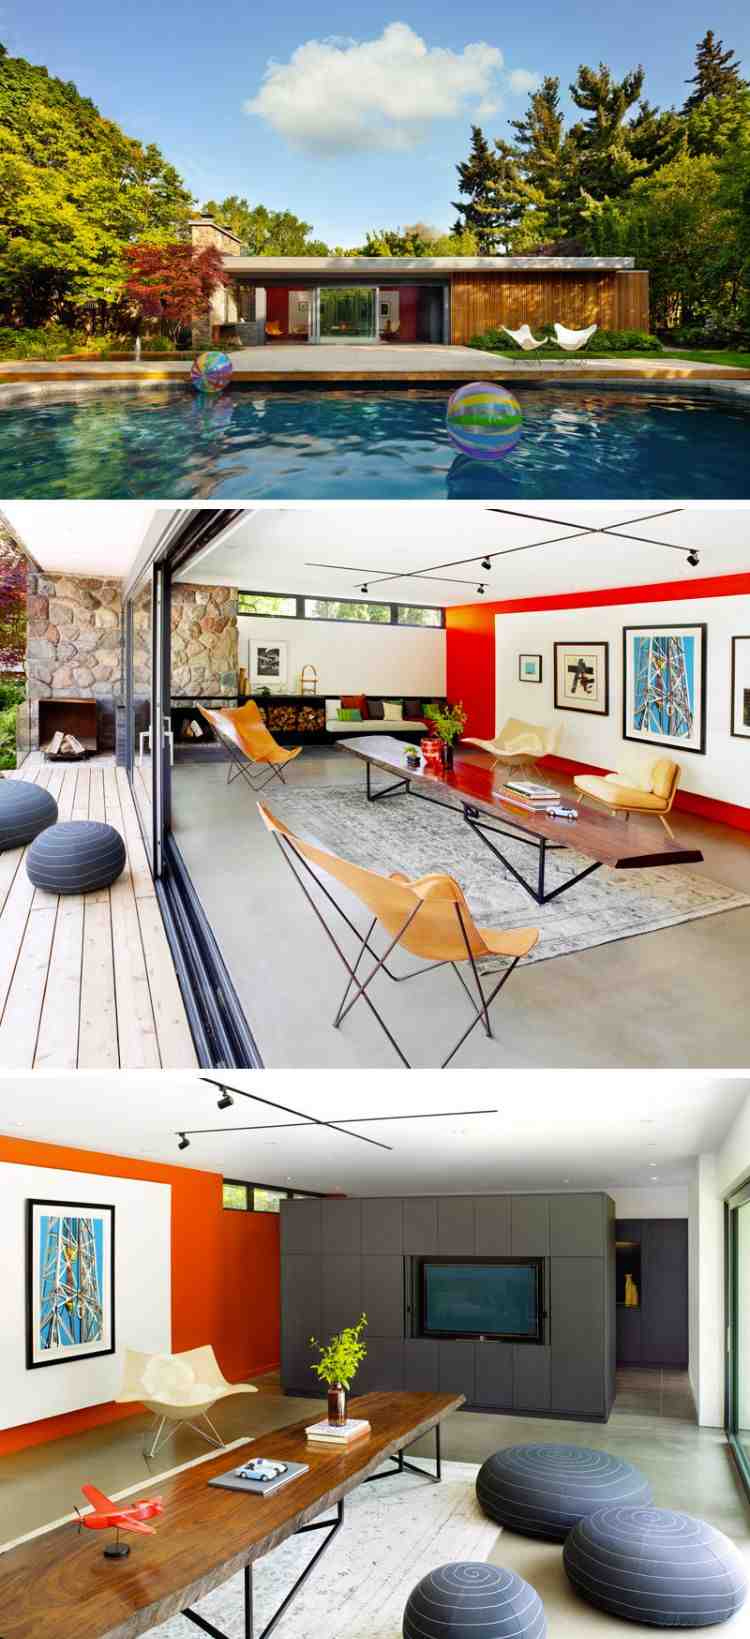 swimmingpool-im-garten-modern-retro-design-architektur-kamin